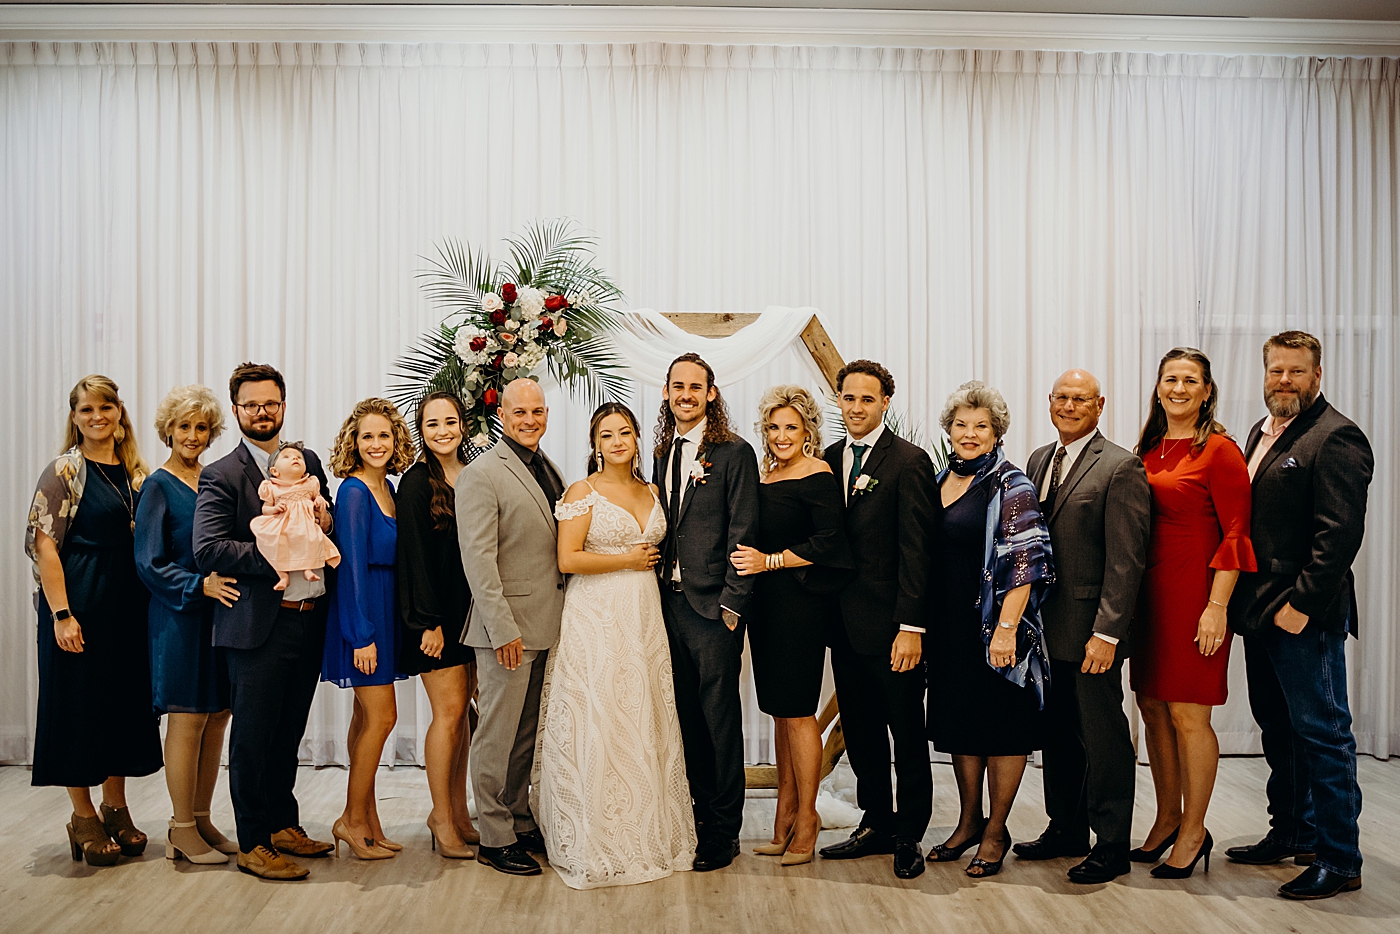 Bride and Groom with family portrait Benvenuto Restaurant Wedding Photography captured by South Florida Wedding Photographer Maggie Alvarez Photography